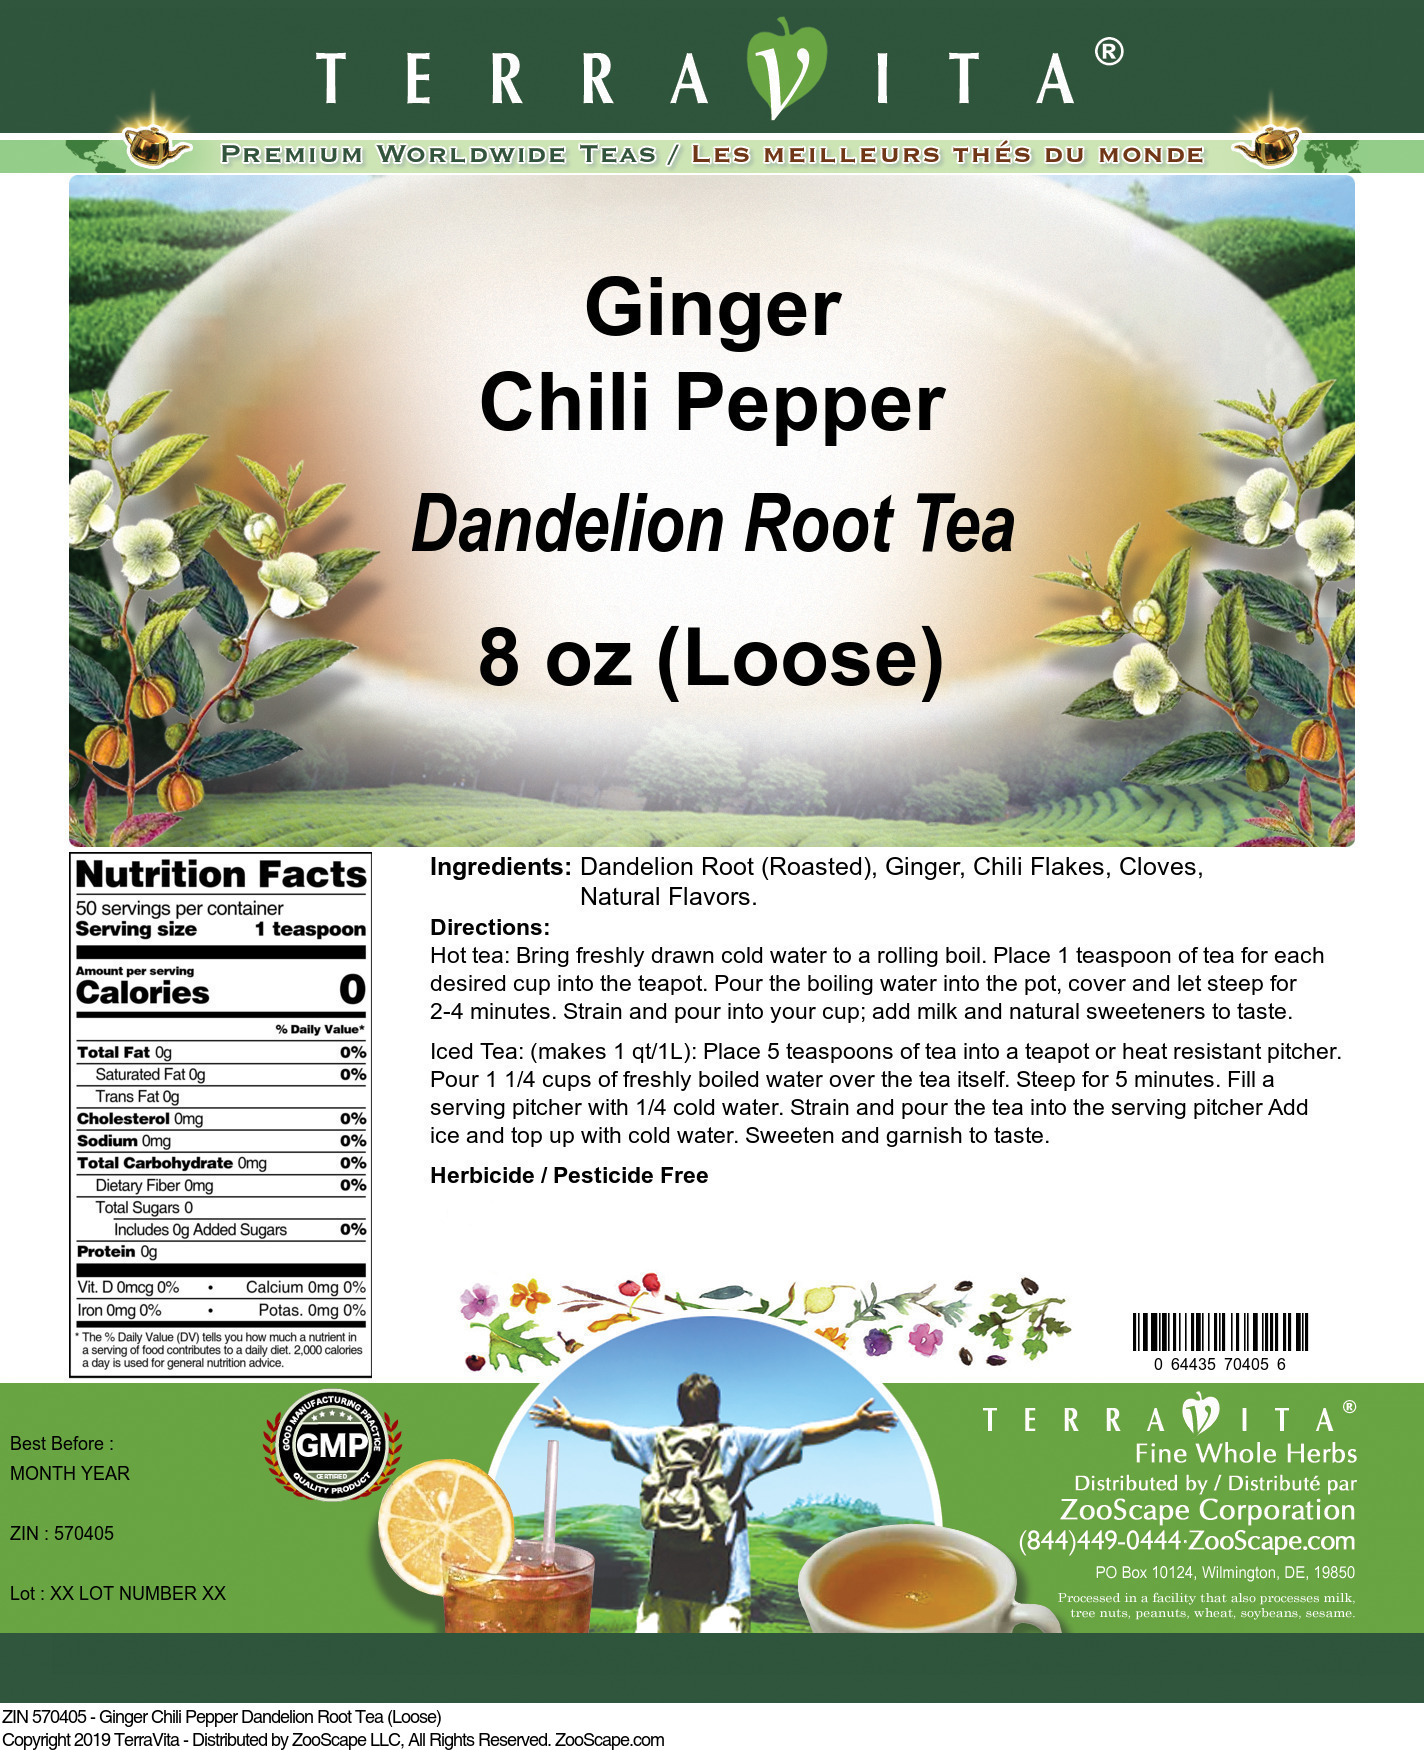 Ginger Chili Pepper Dandelion Root Tea (Loose) - Label